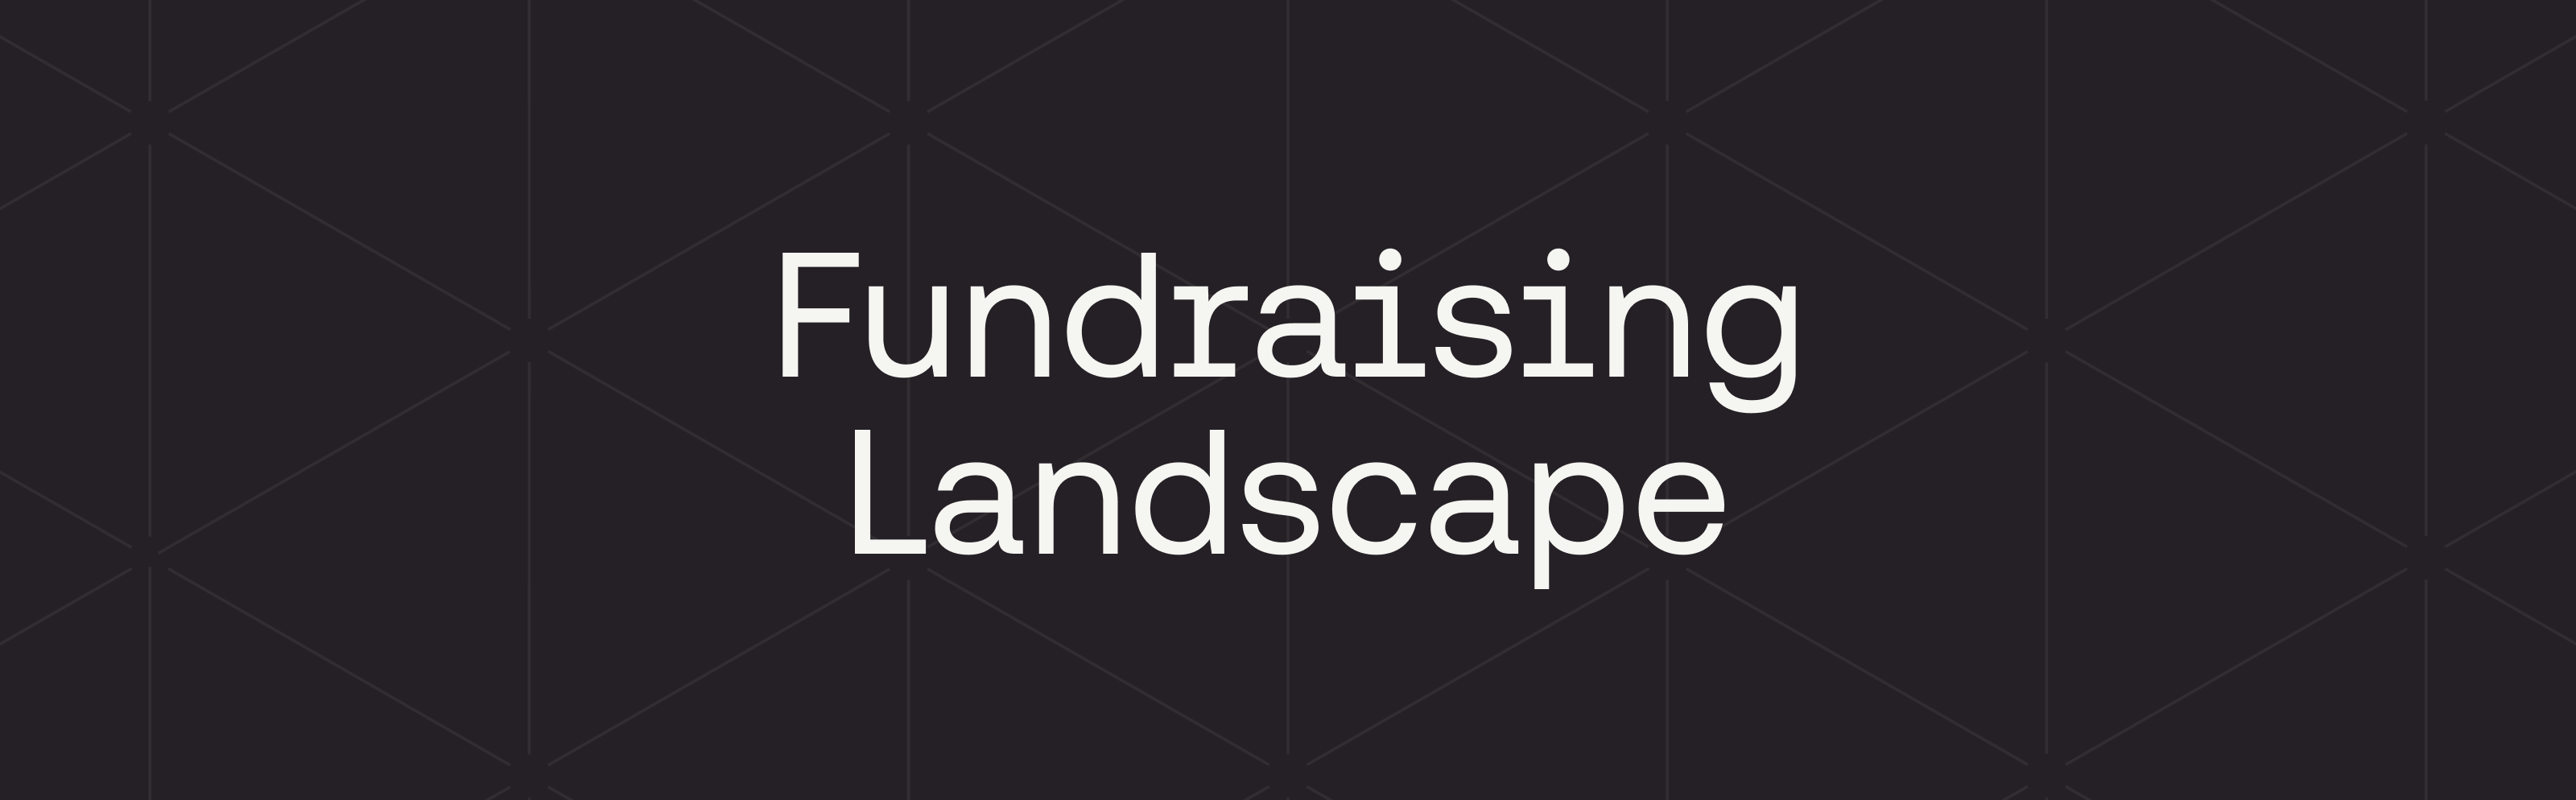 Fundraising Landscape